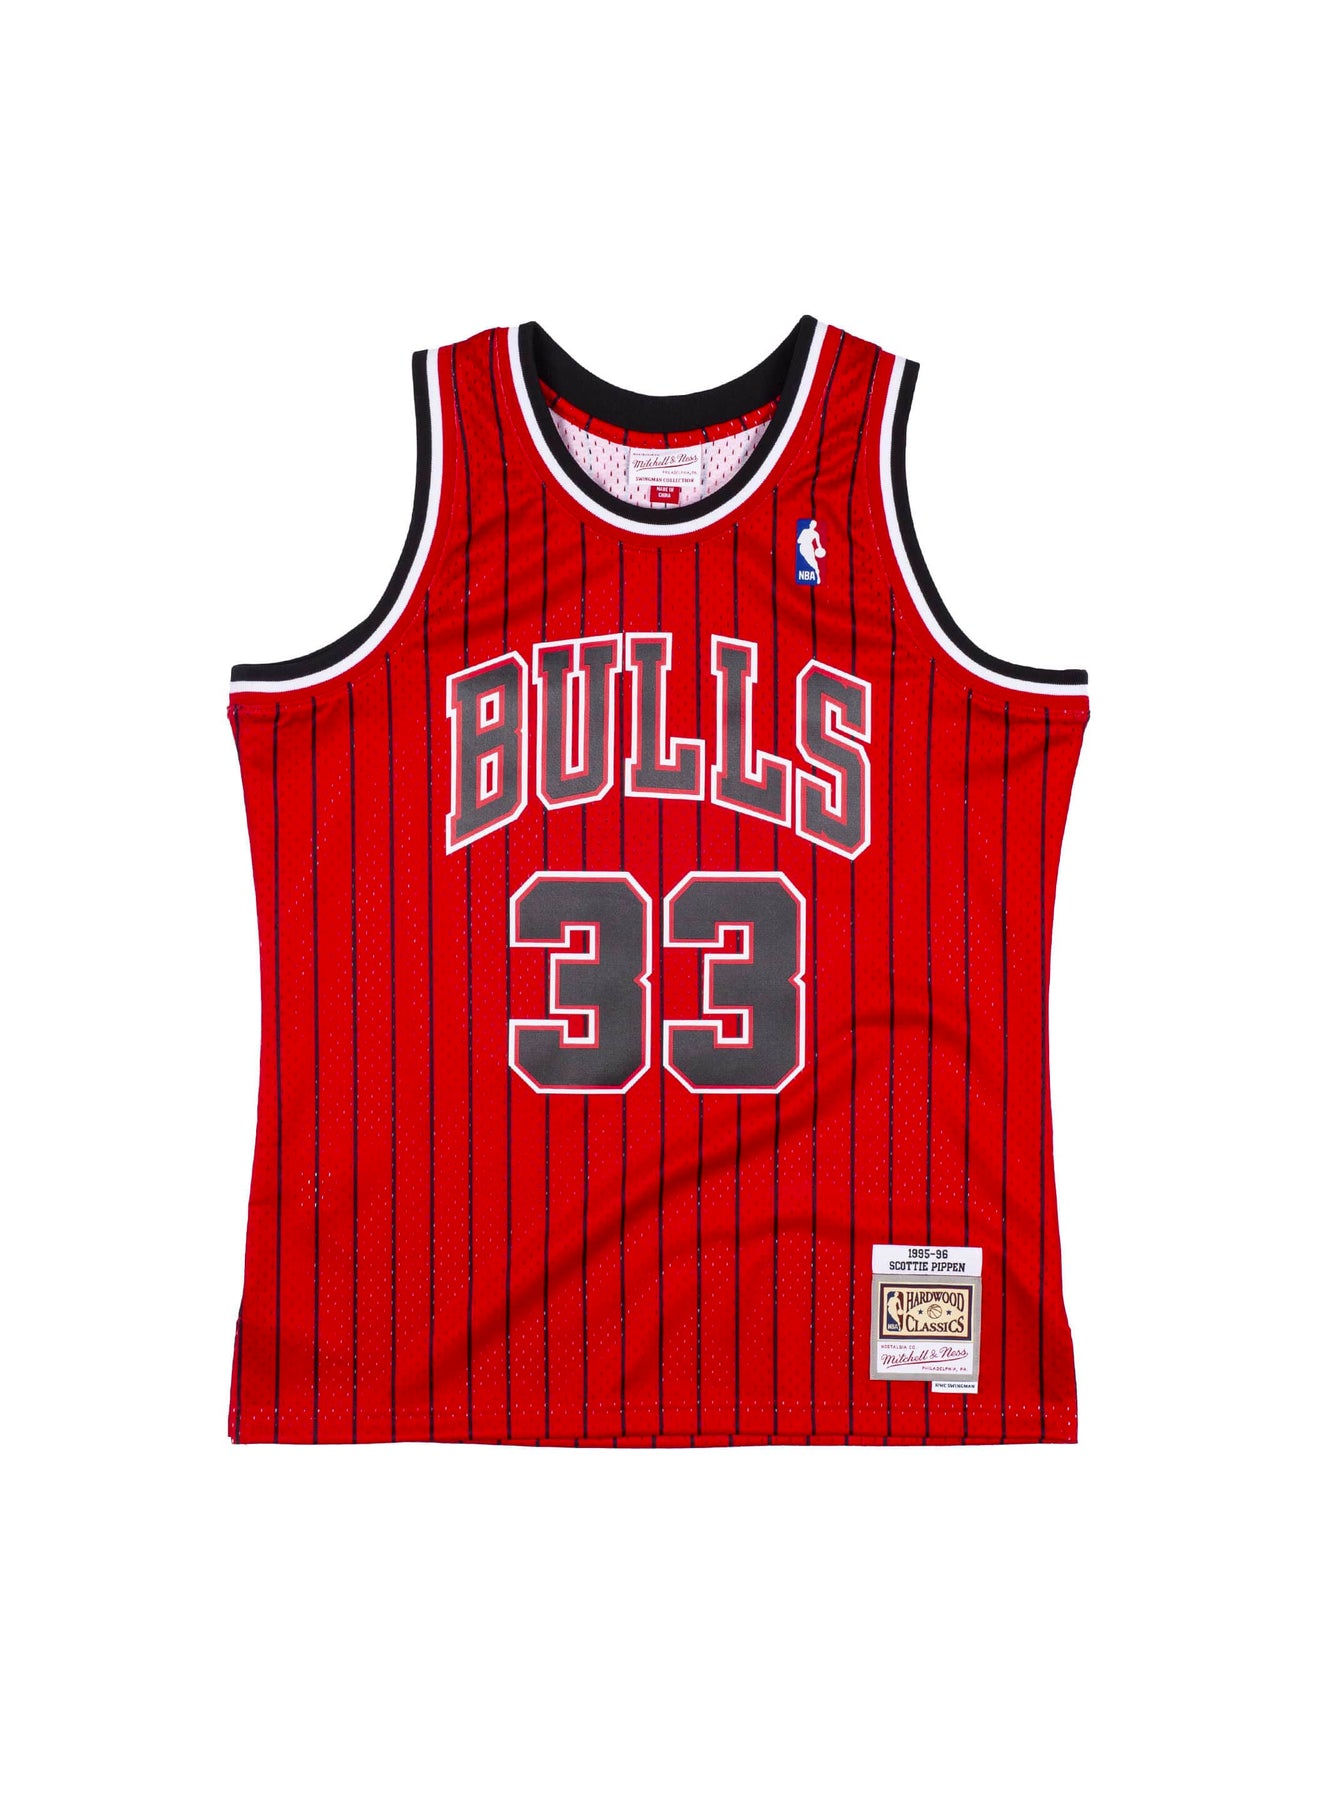 NBA Swingman Jersey Chicago Bulls Alternate 1997-98 Scottie Pippen